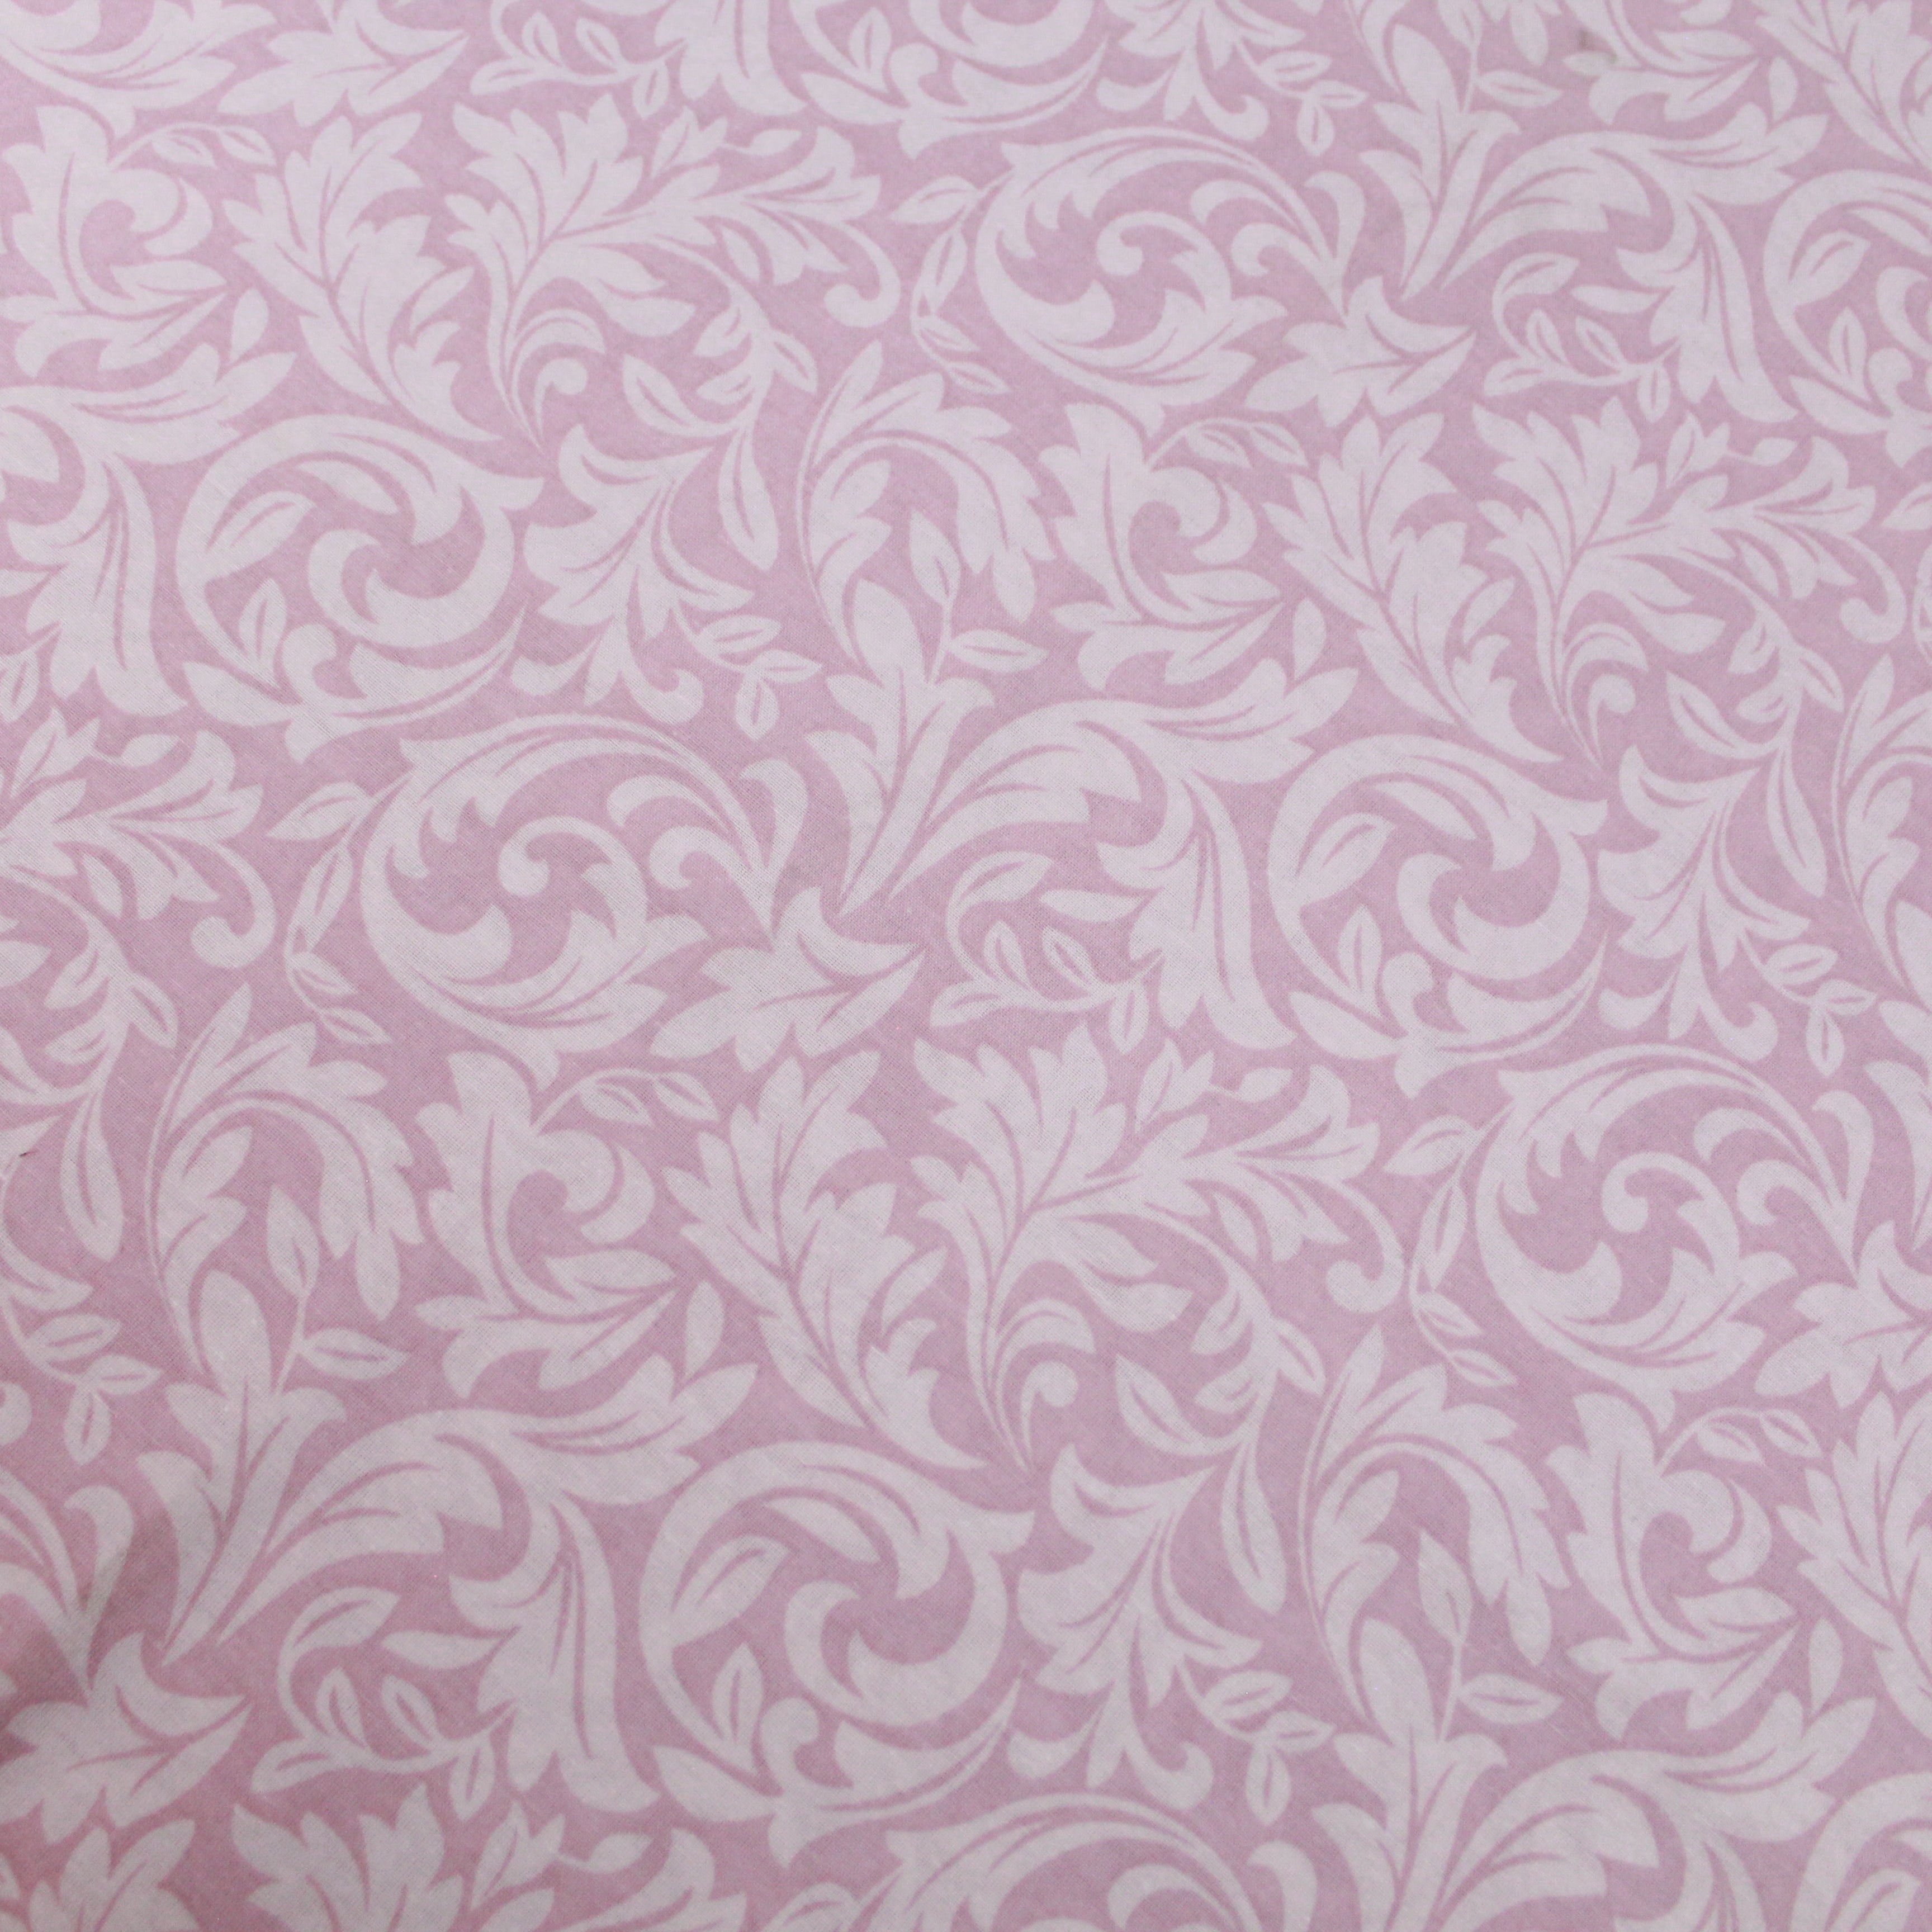 Premium Quality Super Wide Cotton Blend Sheeting "Leaf's" 94" Wide Pink